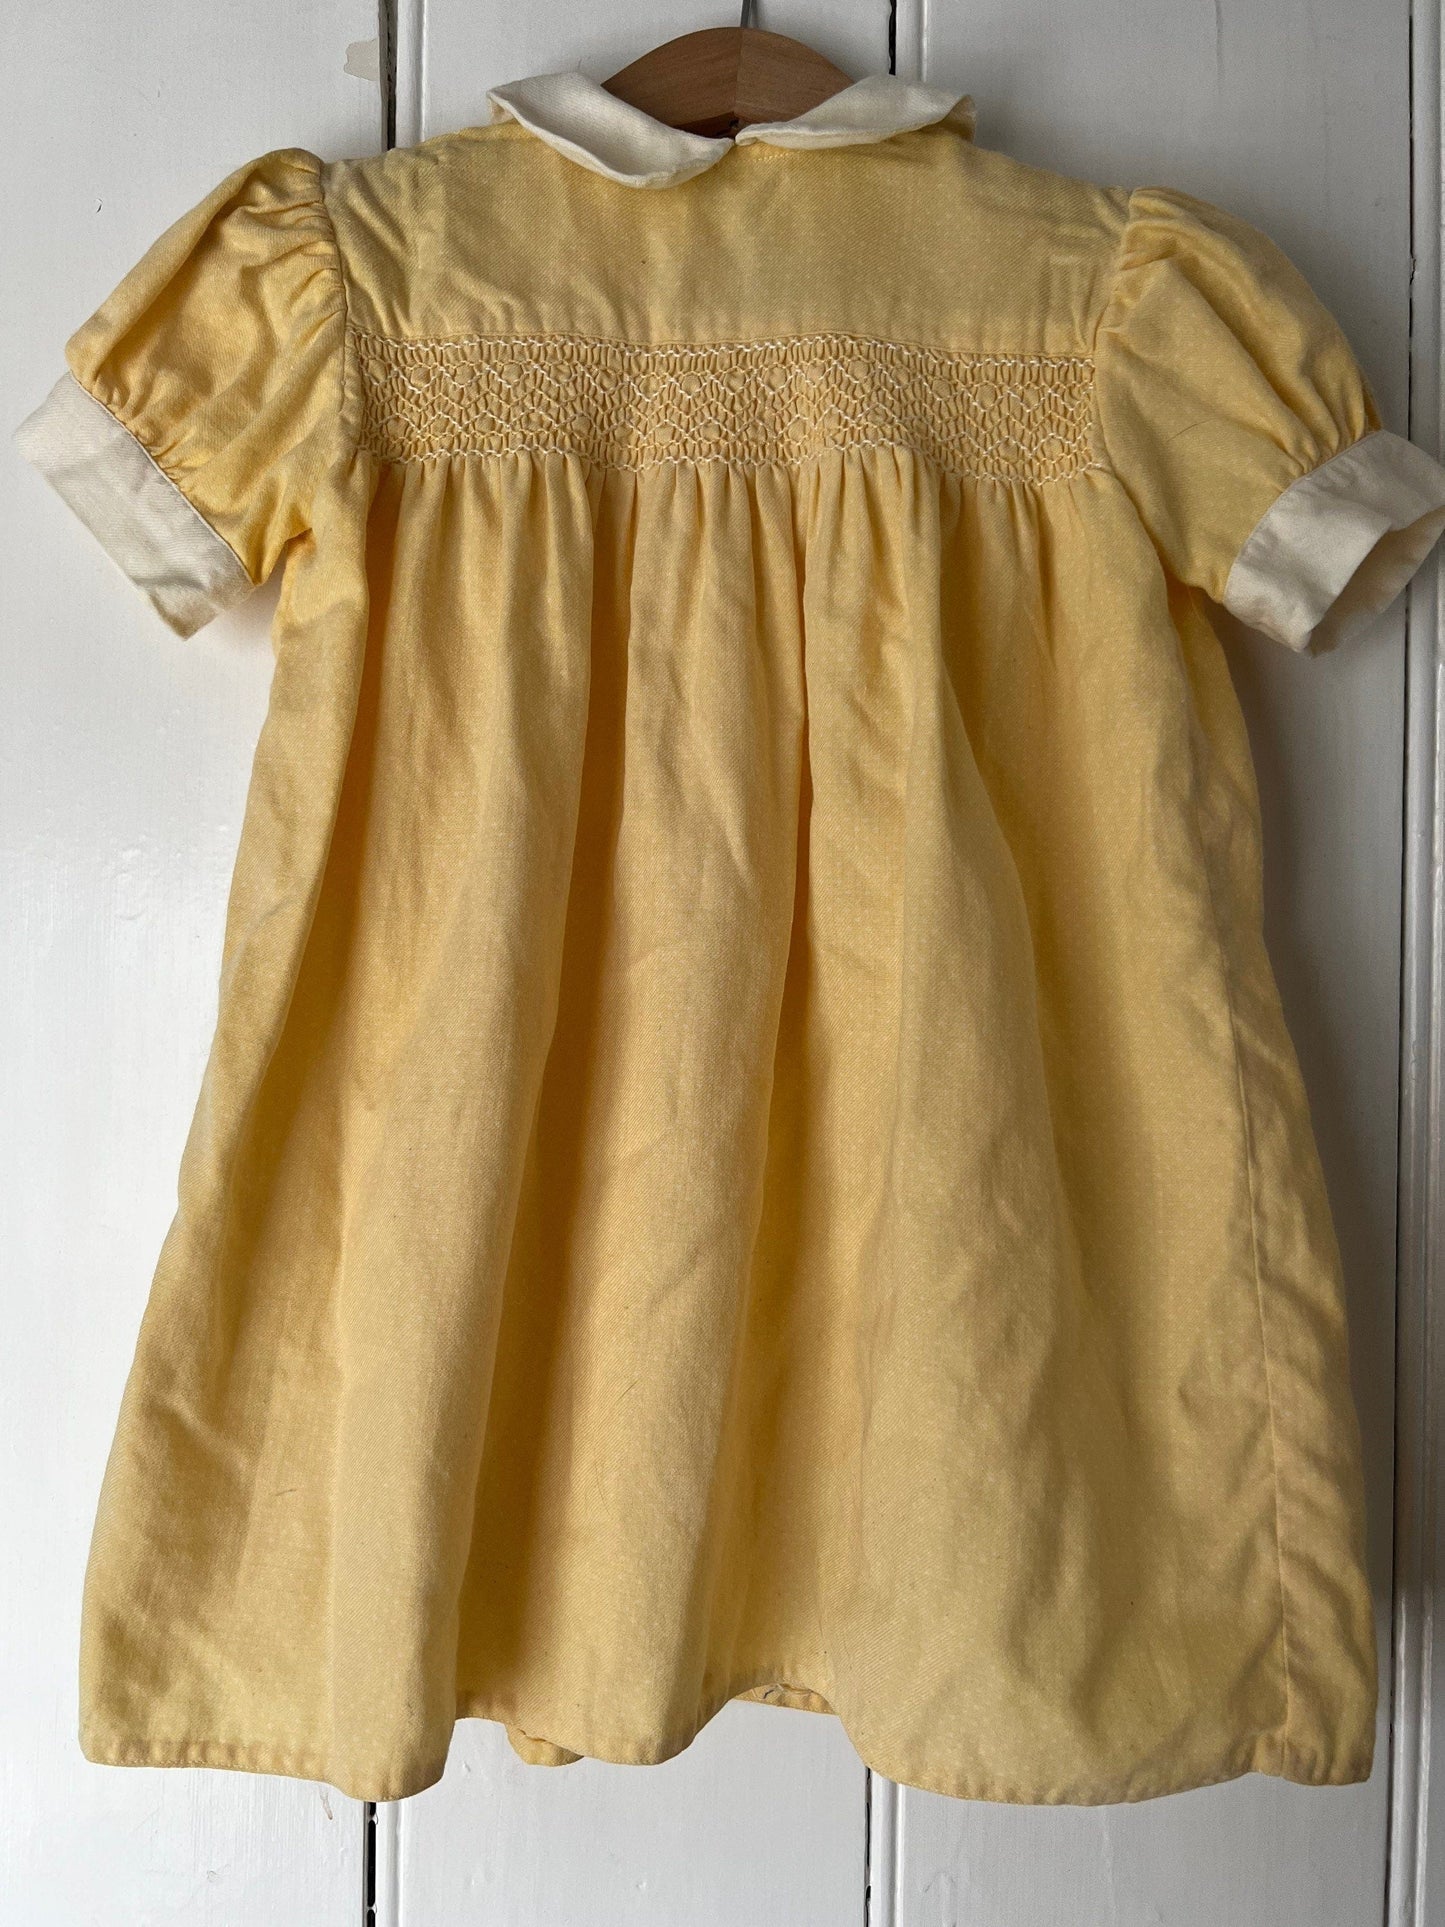 Vintage Girls Dress - yellow spotty pattern Dress Baby Dress 2-3 years